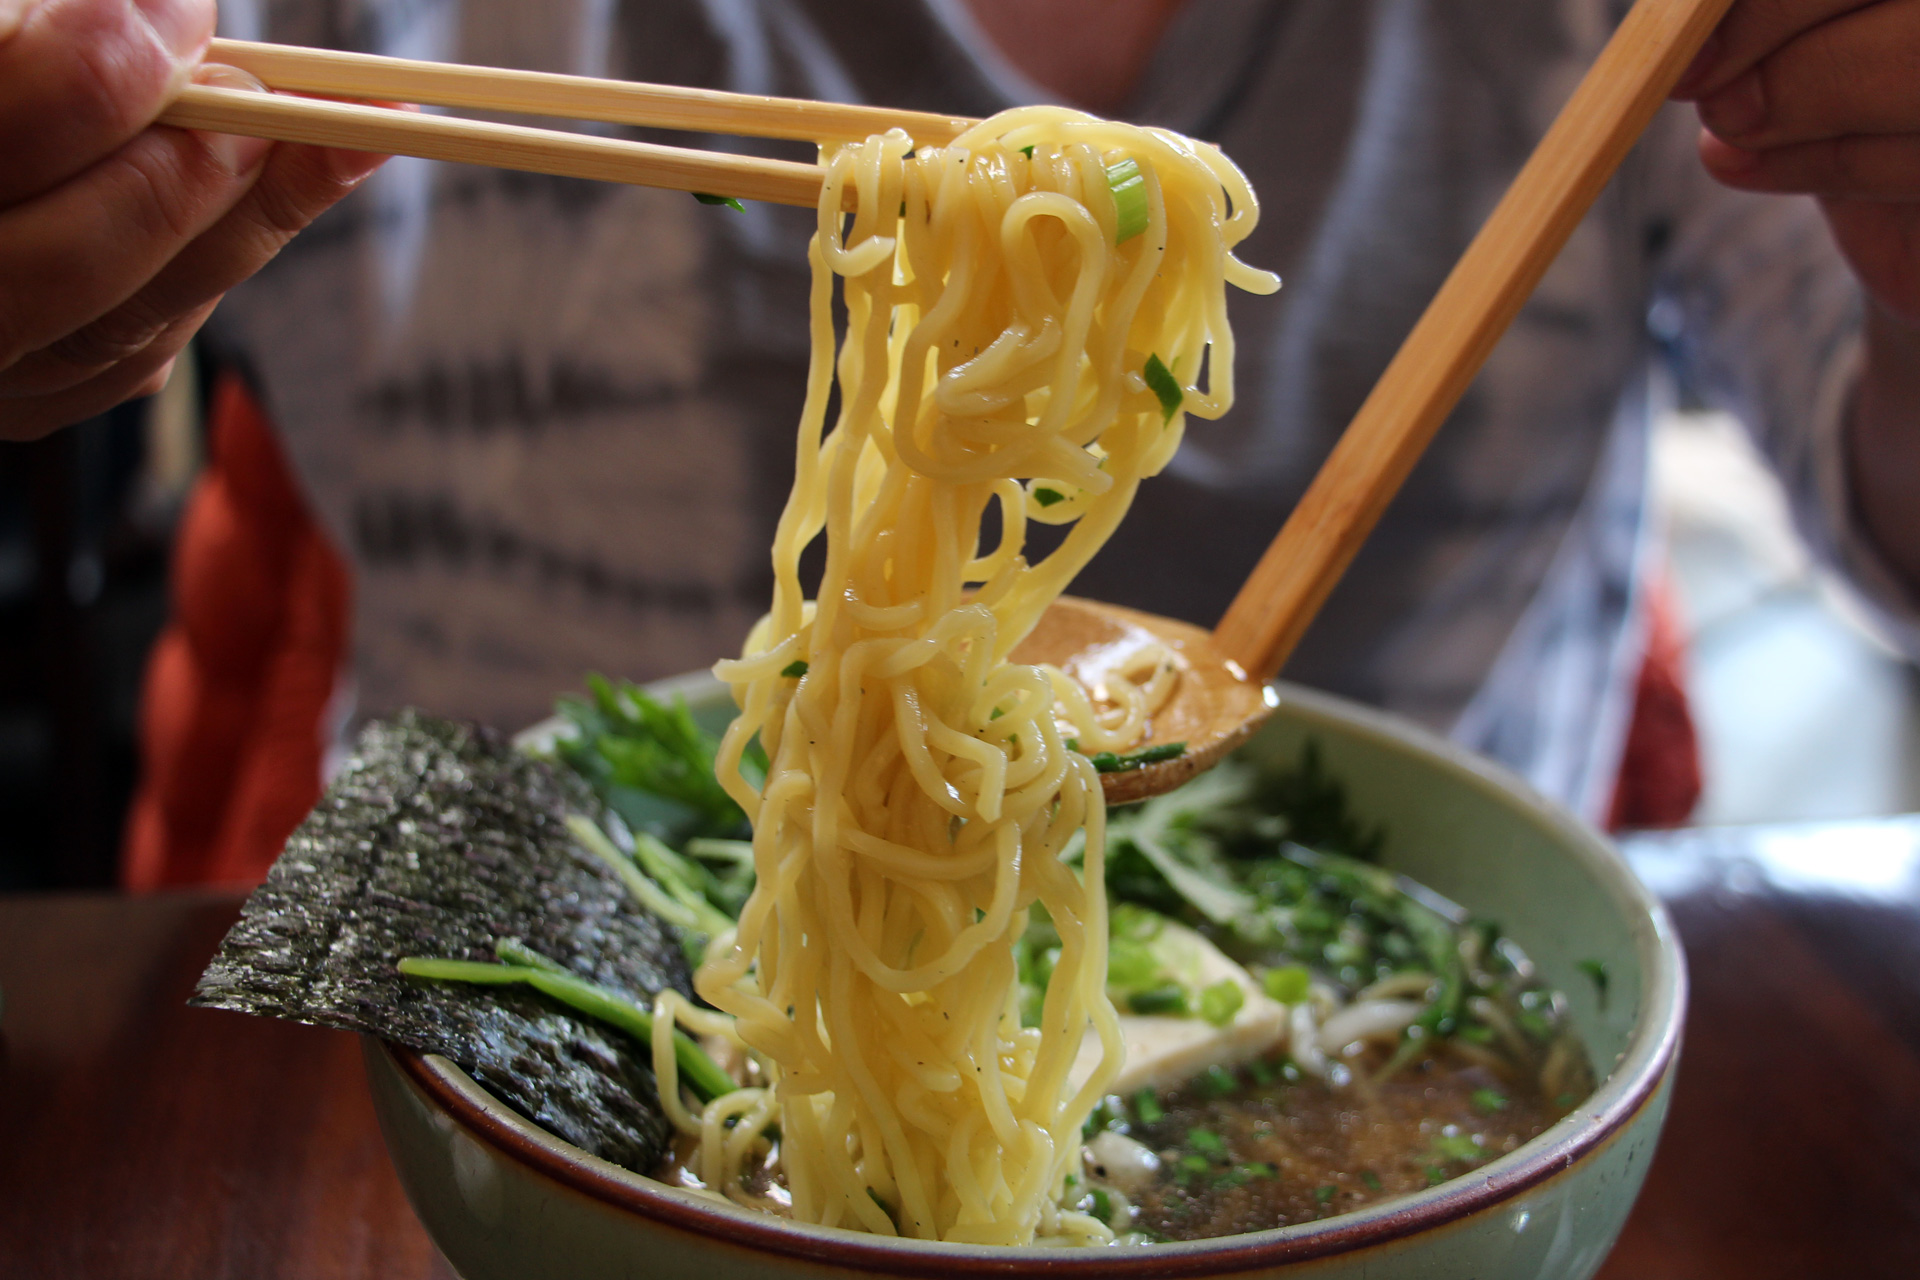 The noodles from the vegetarian shoyu ramen